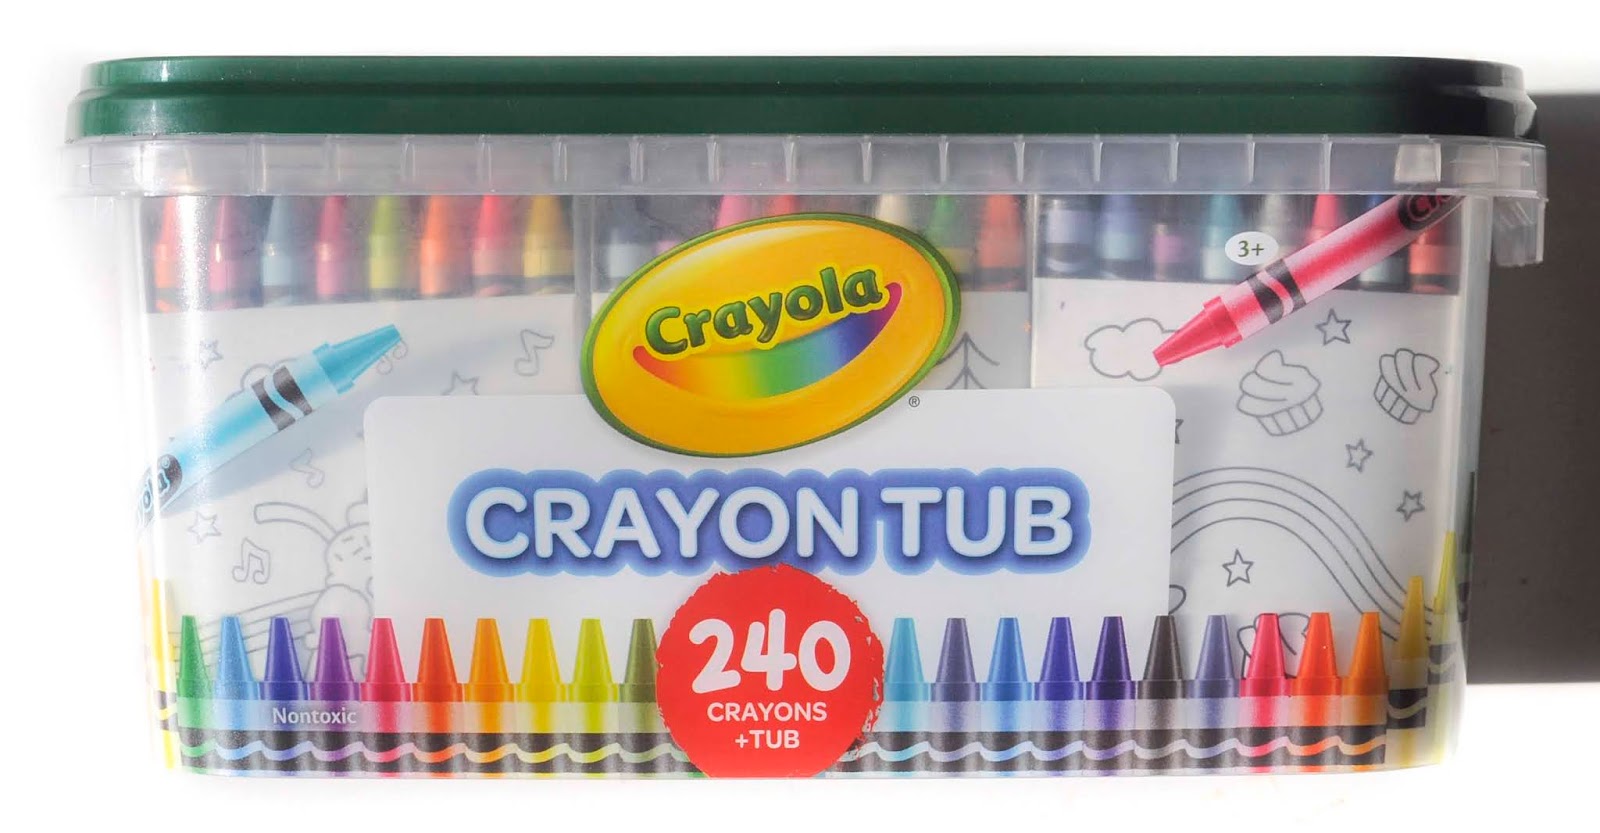 3 Crayola Crayons 24 Count LAST Packaging Before Bluetiful w/ DANDELION